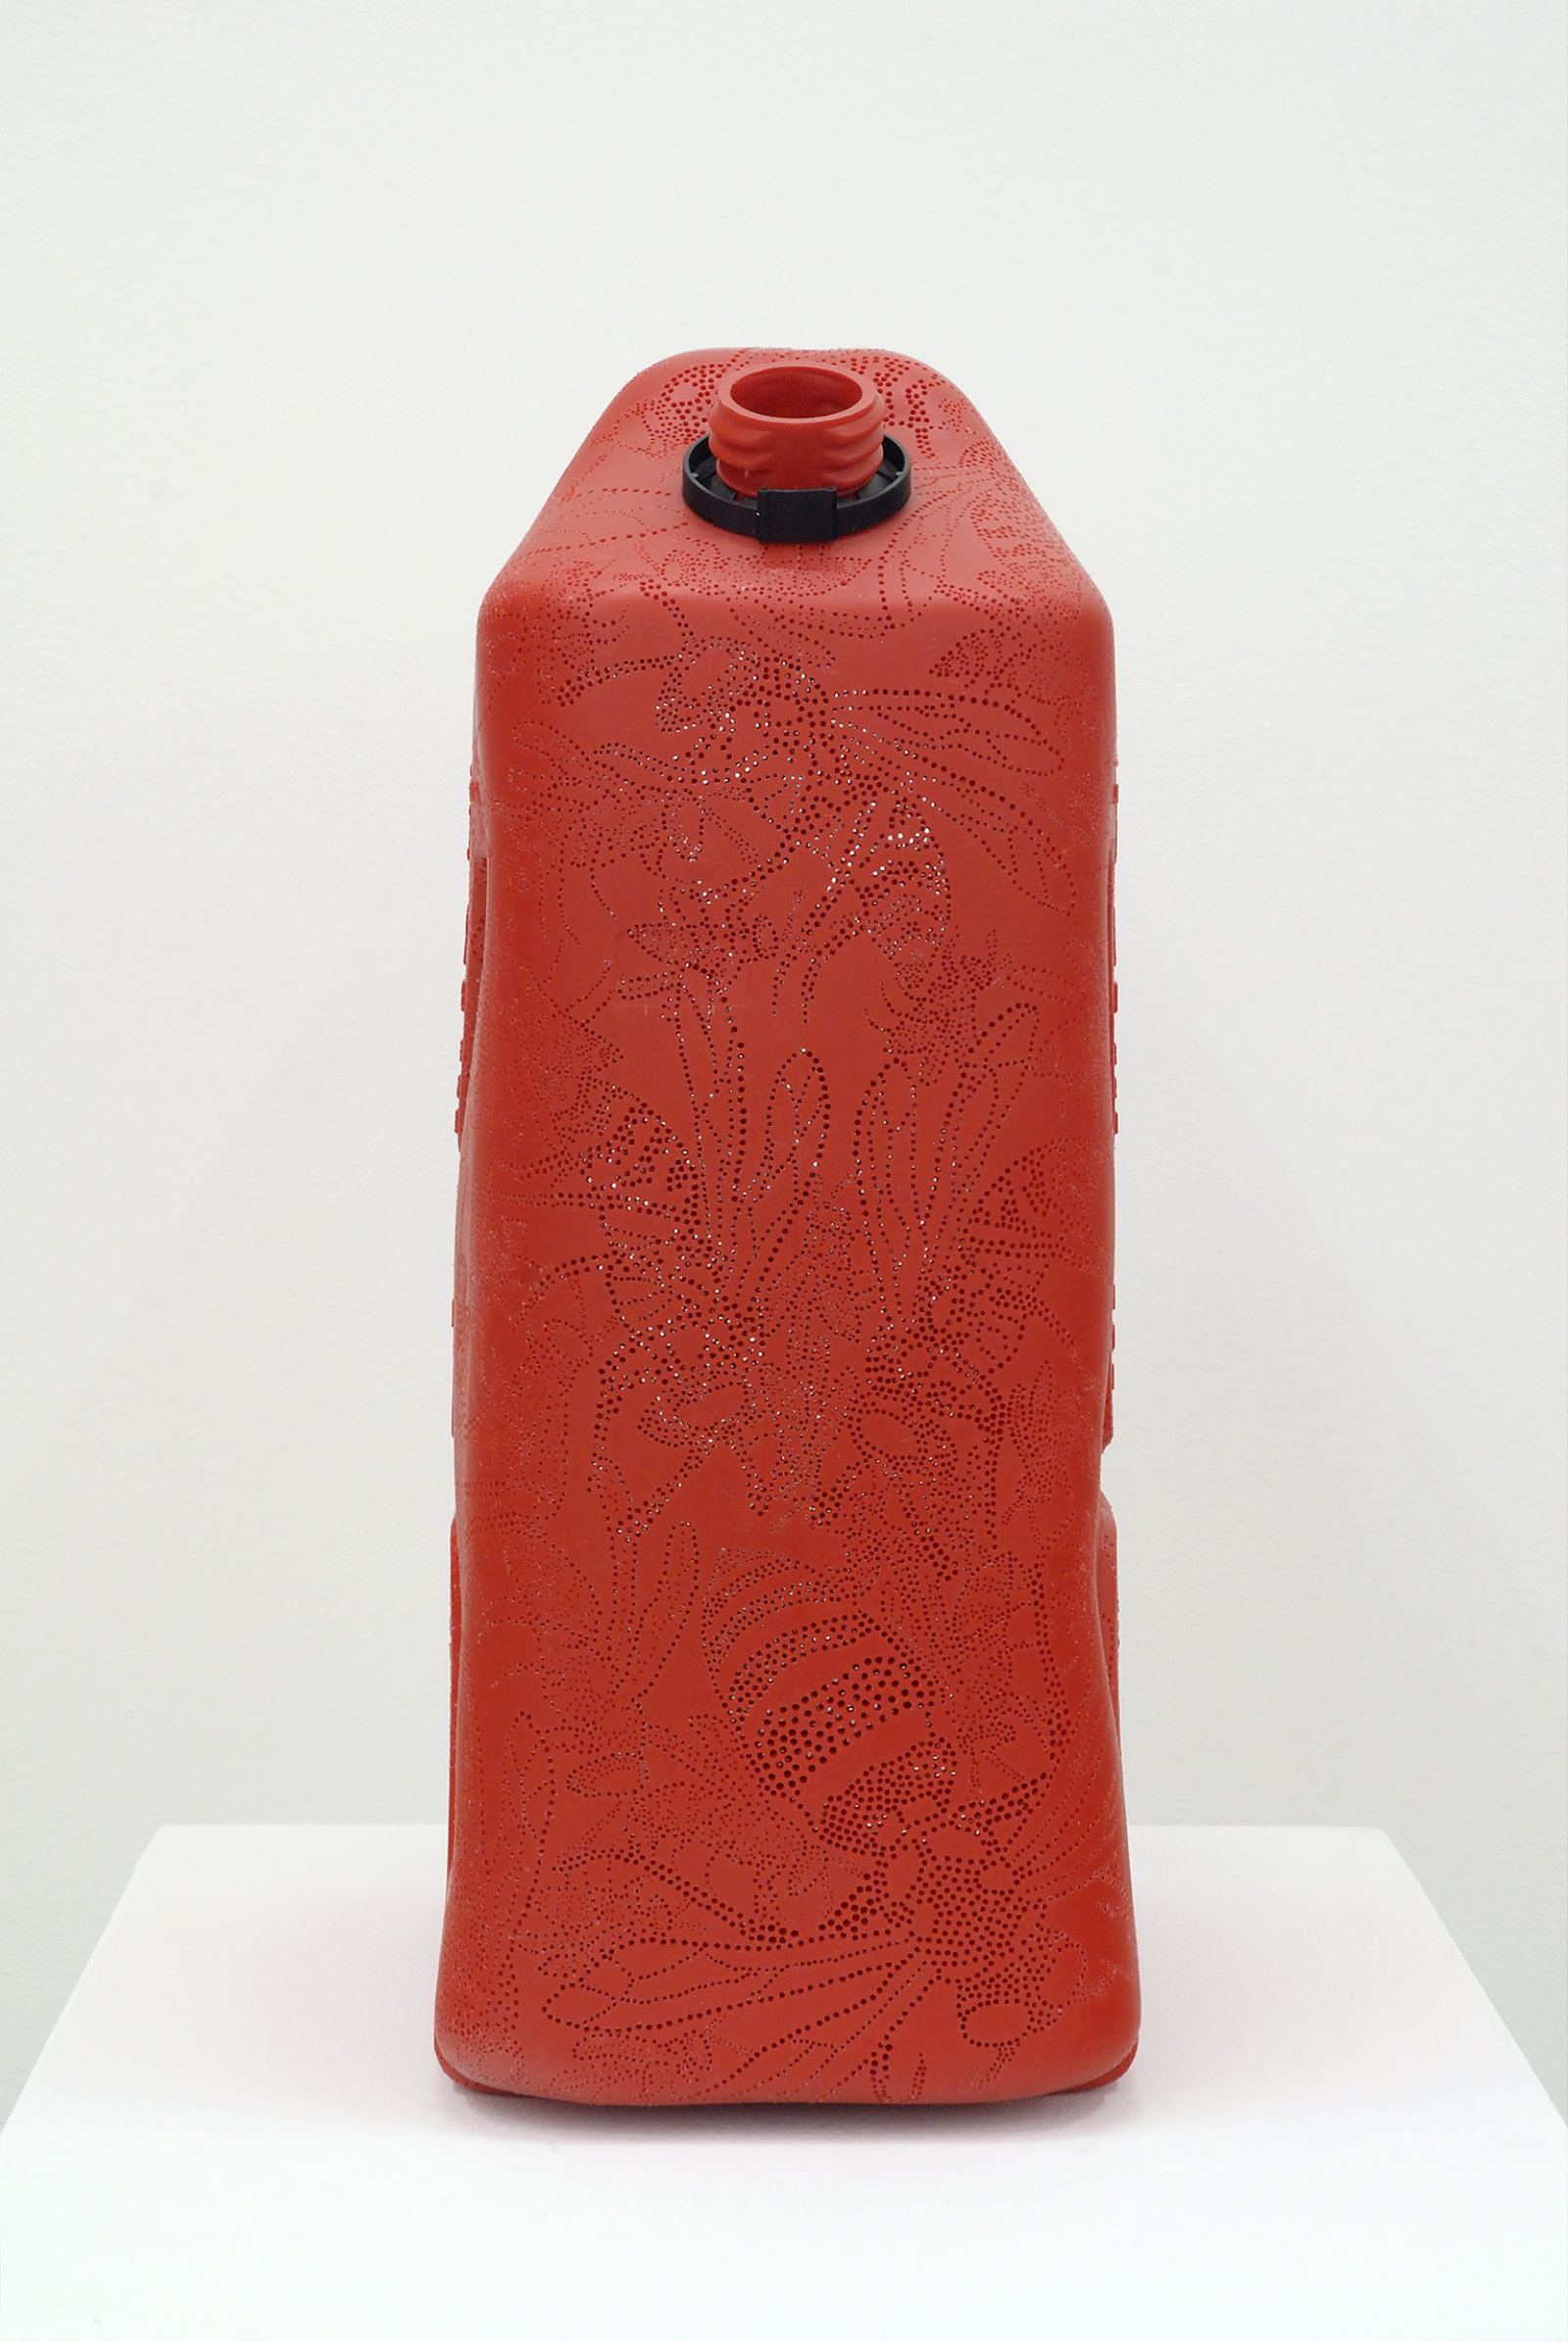 Brian Jungen, Wasp, 2008, carved gallon gasoline jug, 18 x 13 x 7 in. (46 x 33 x 18 cm)